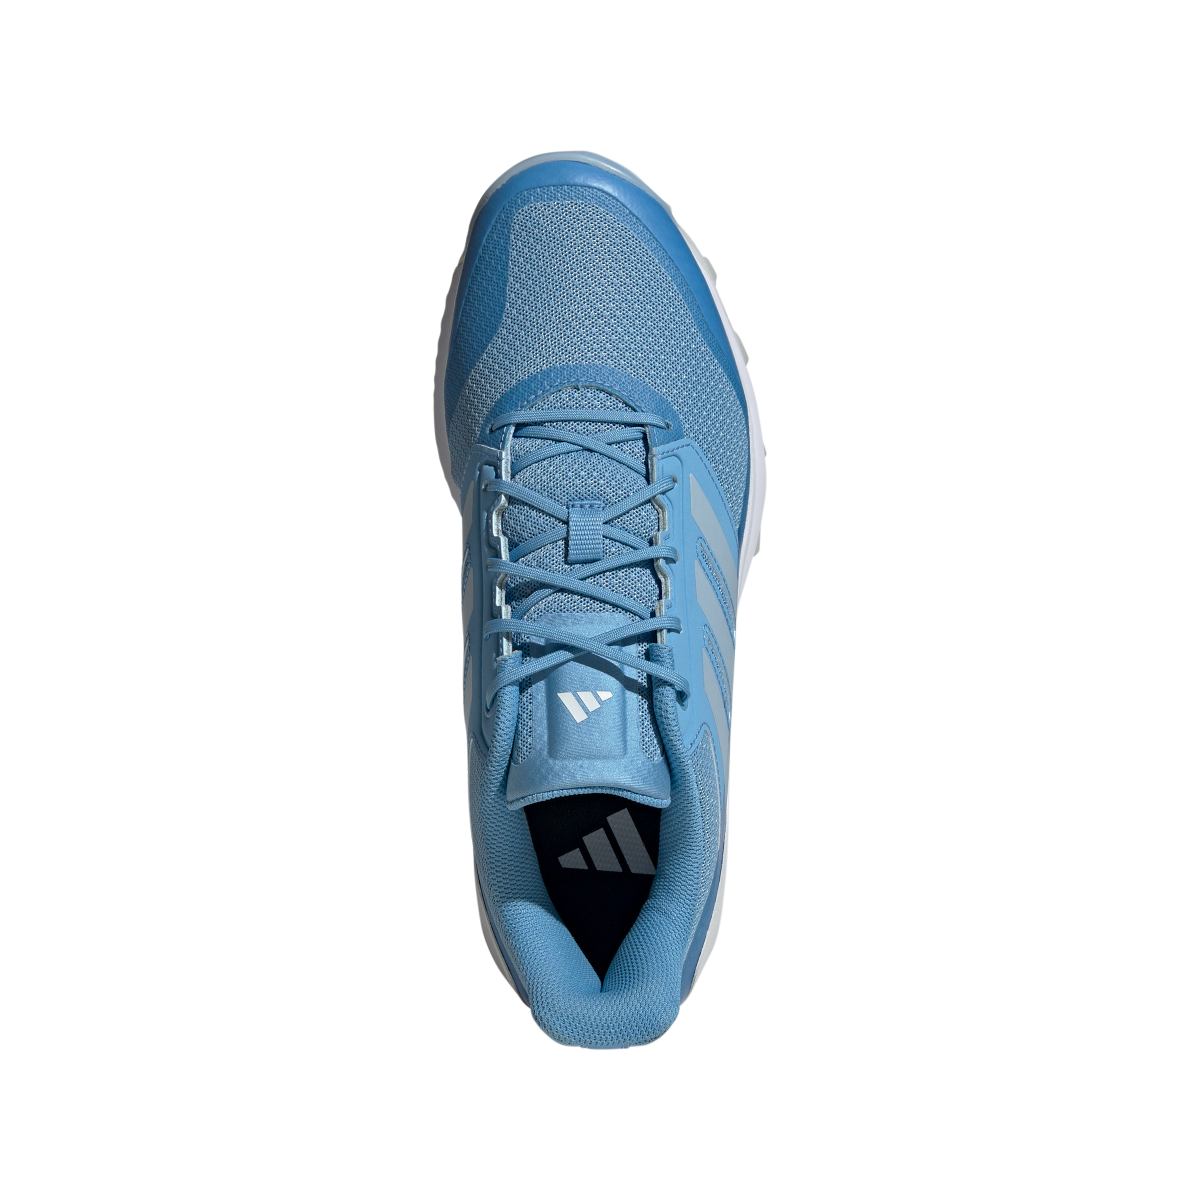 Adidas Flexcloud Hockey Shoes Blue